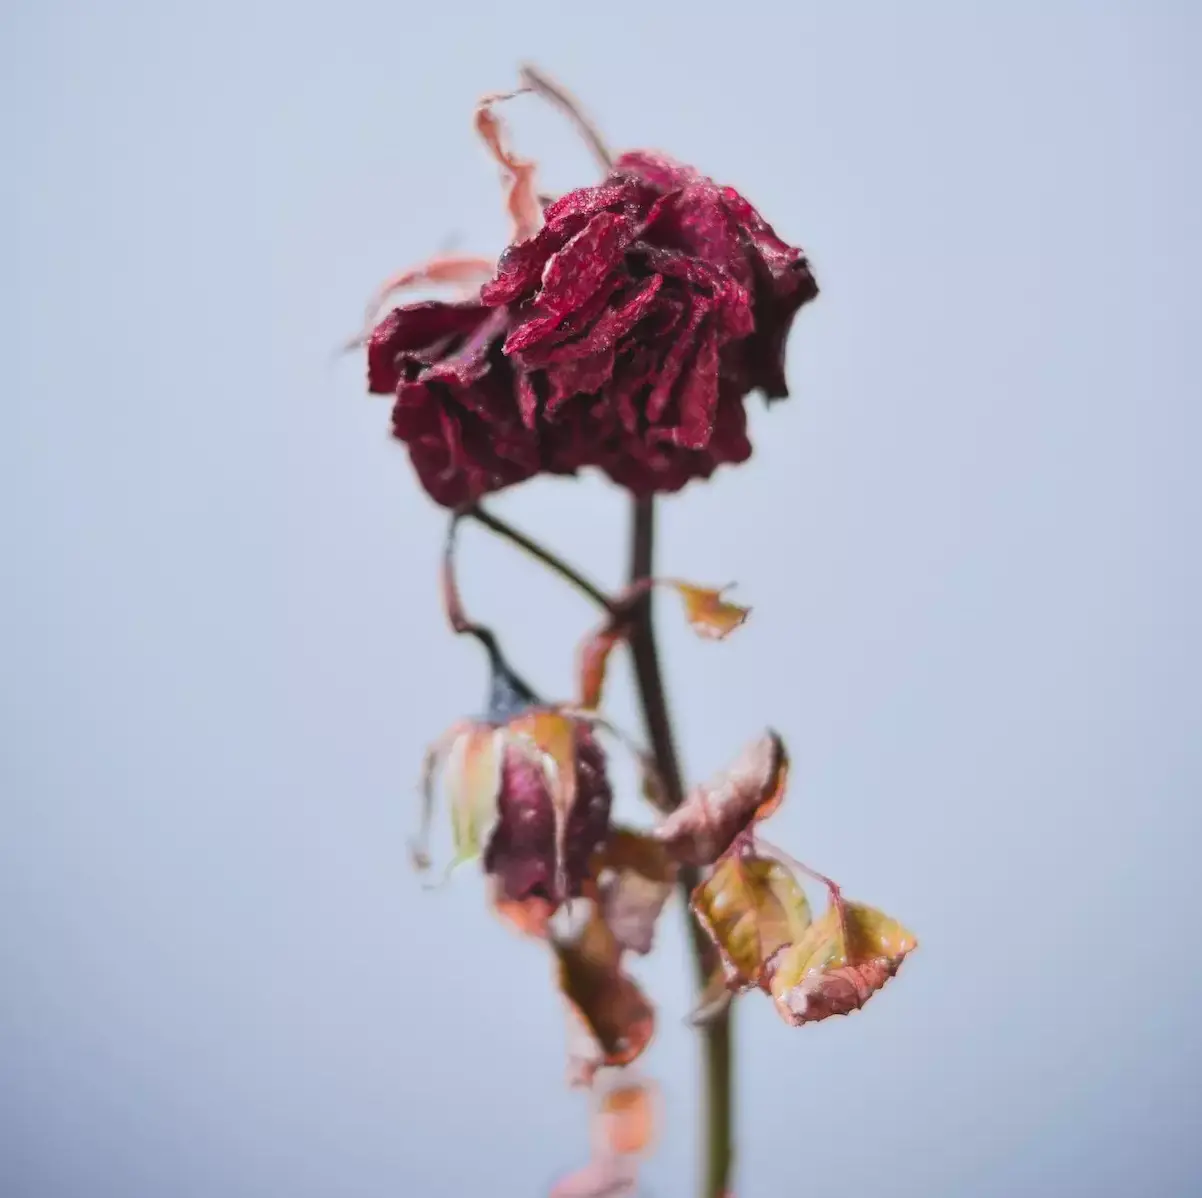 plante morte fleur fanée